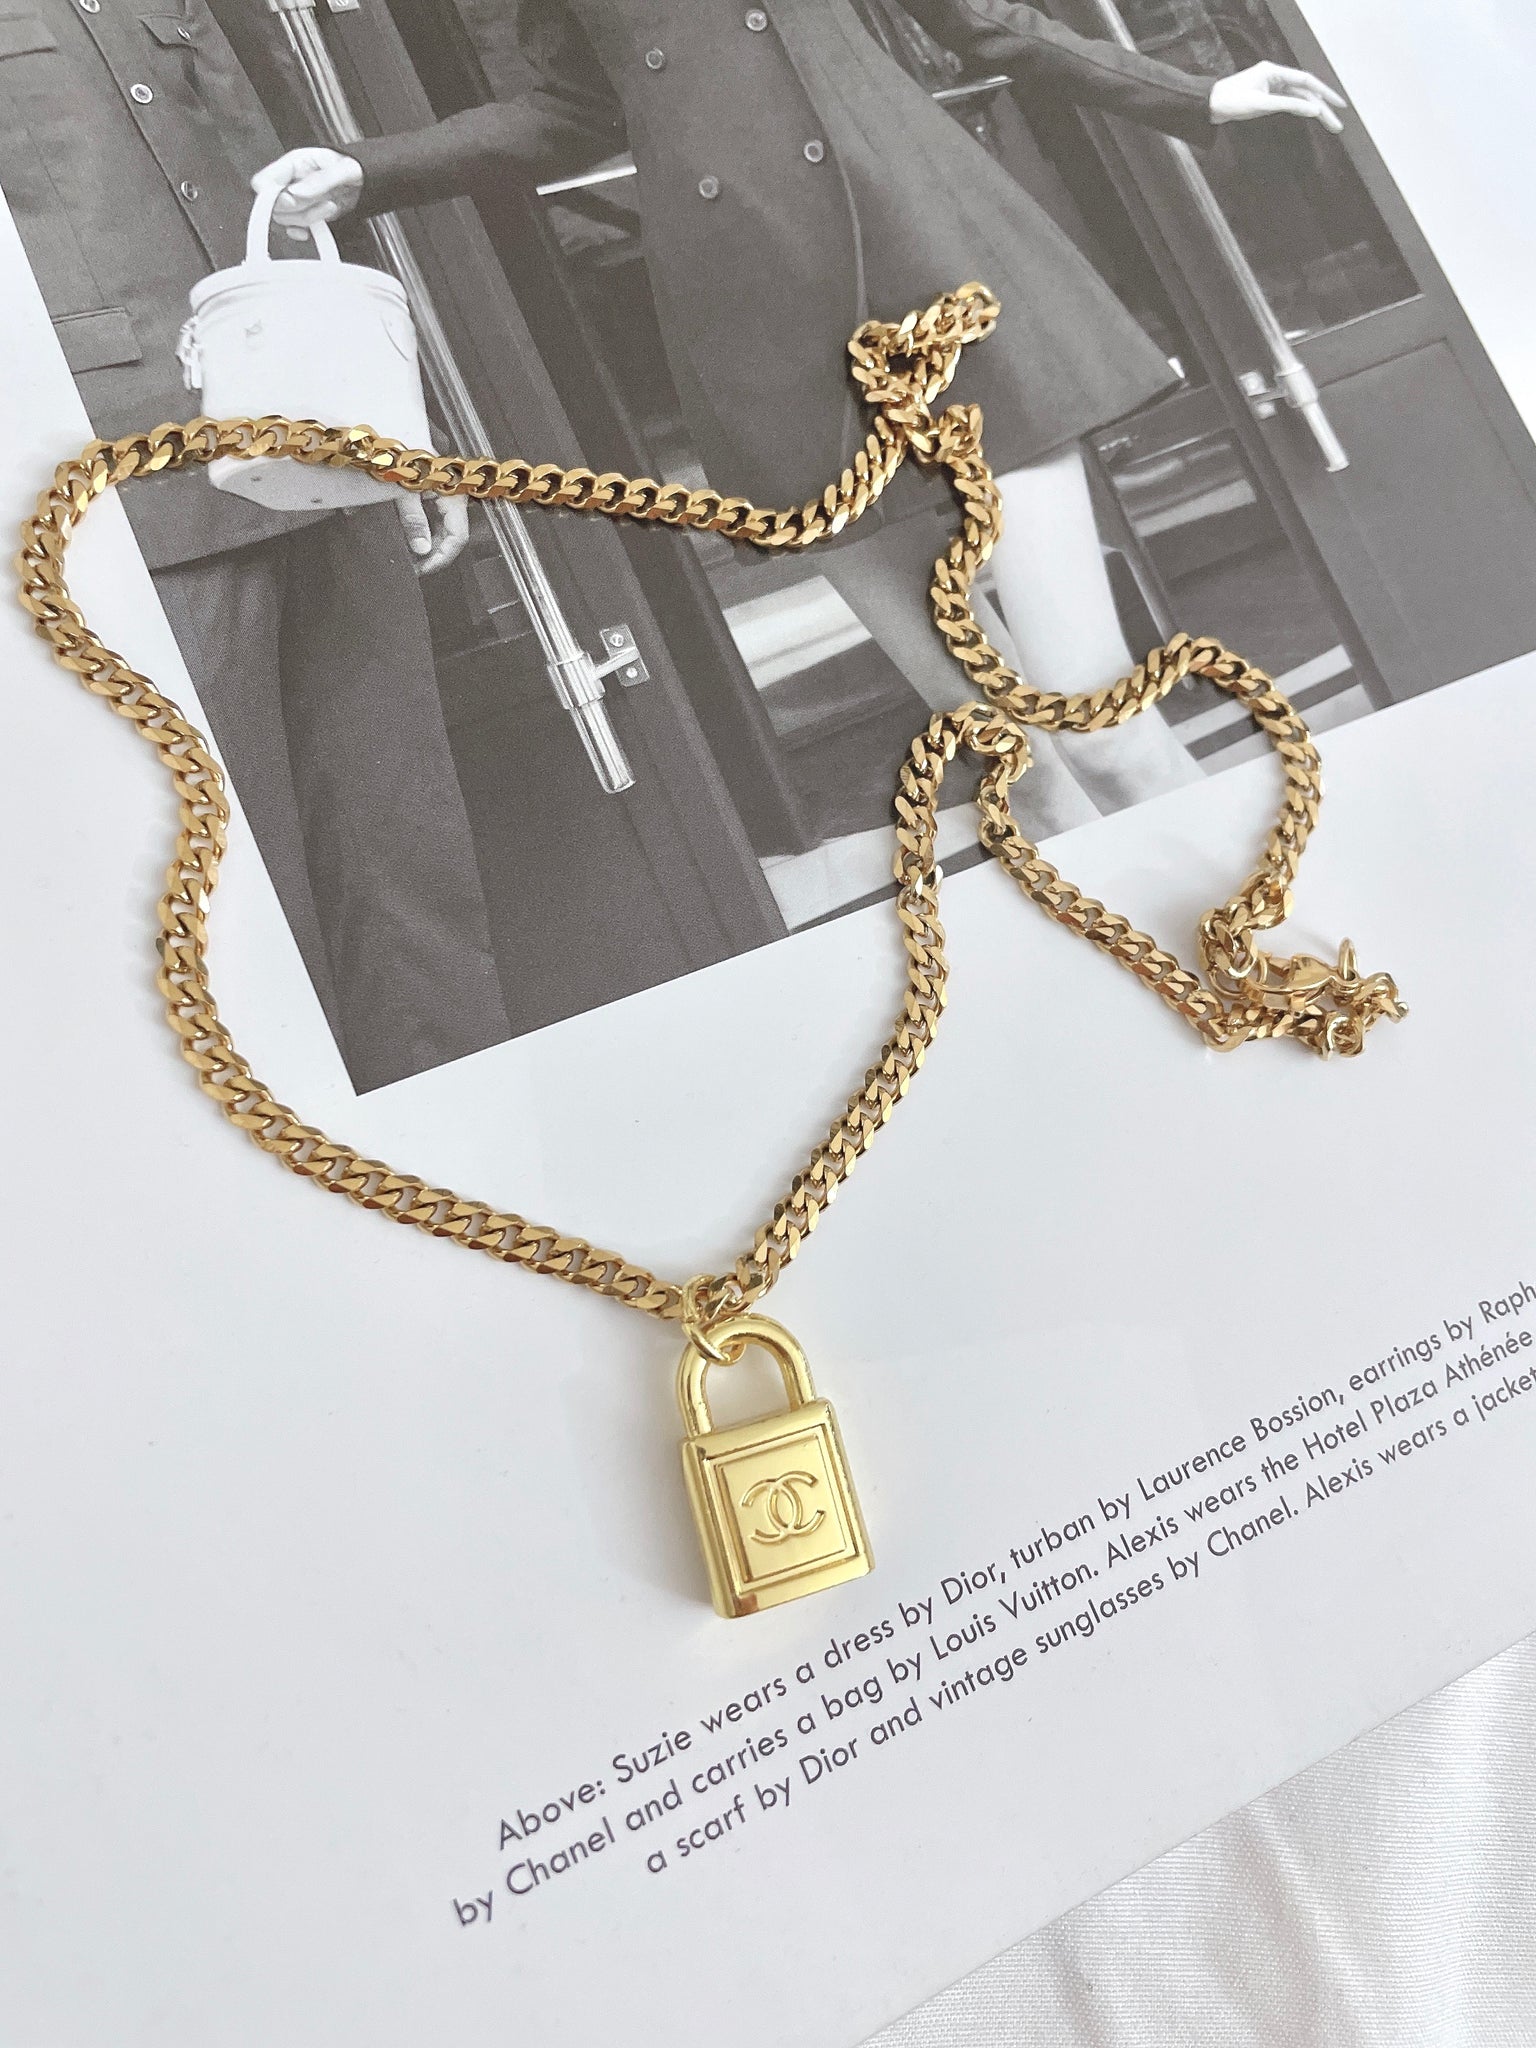 Louis Vuitton Repurposed Vintage Lock & Key Necklace